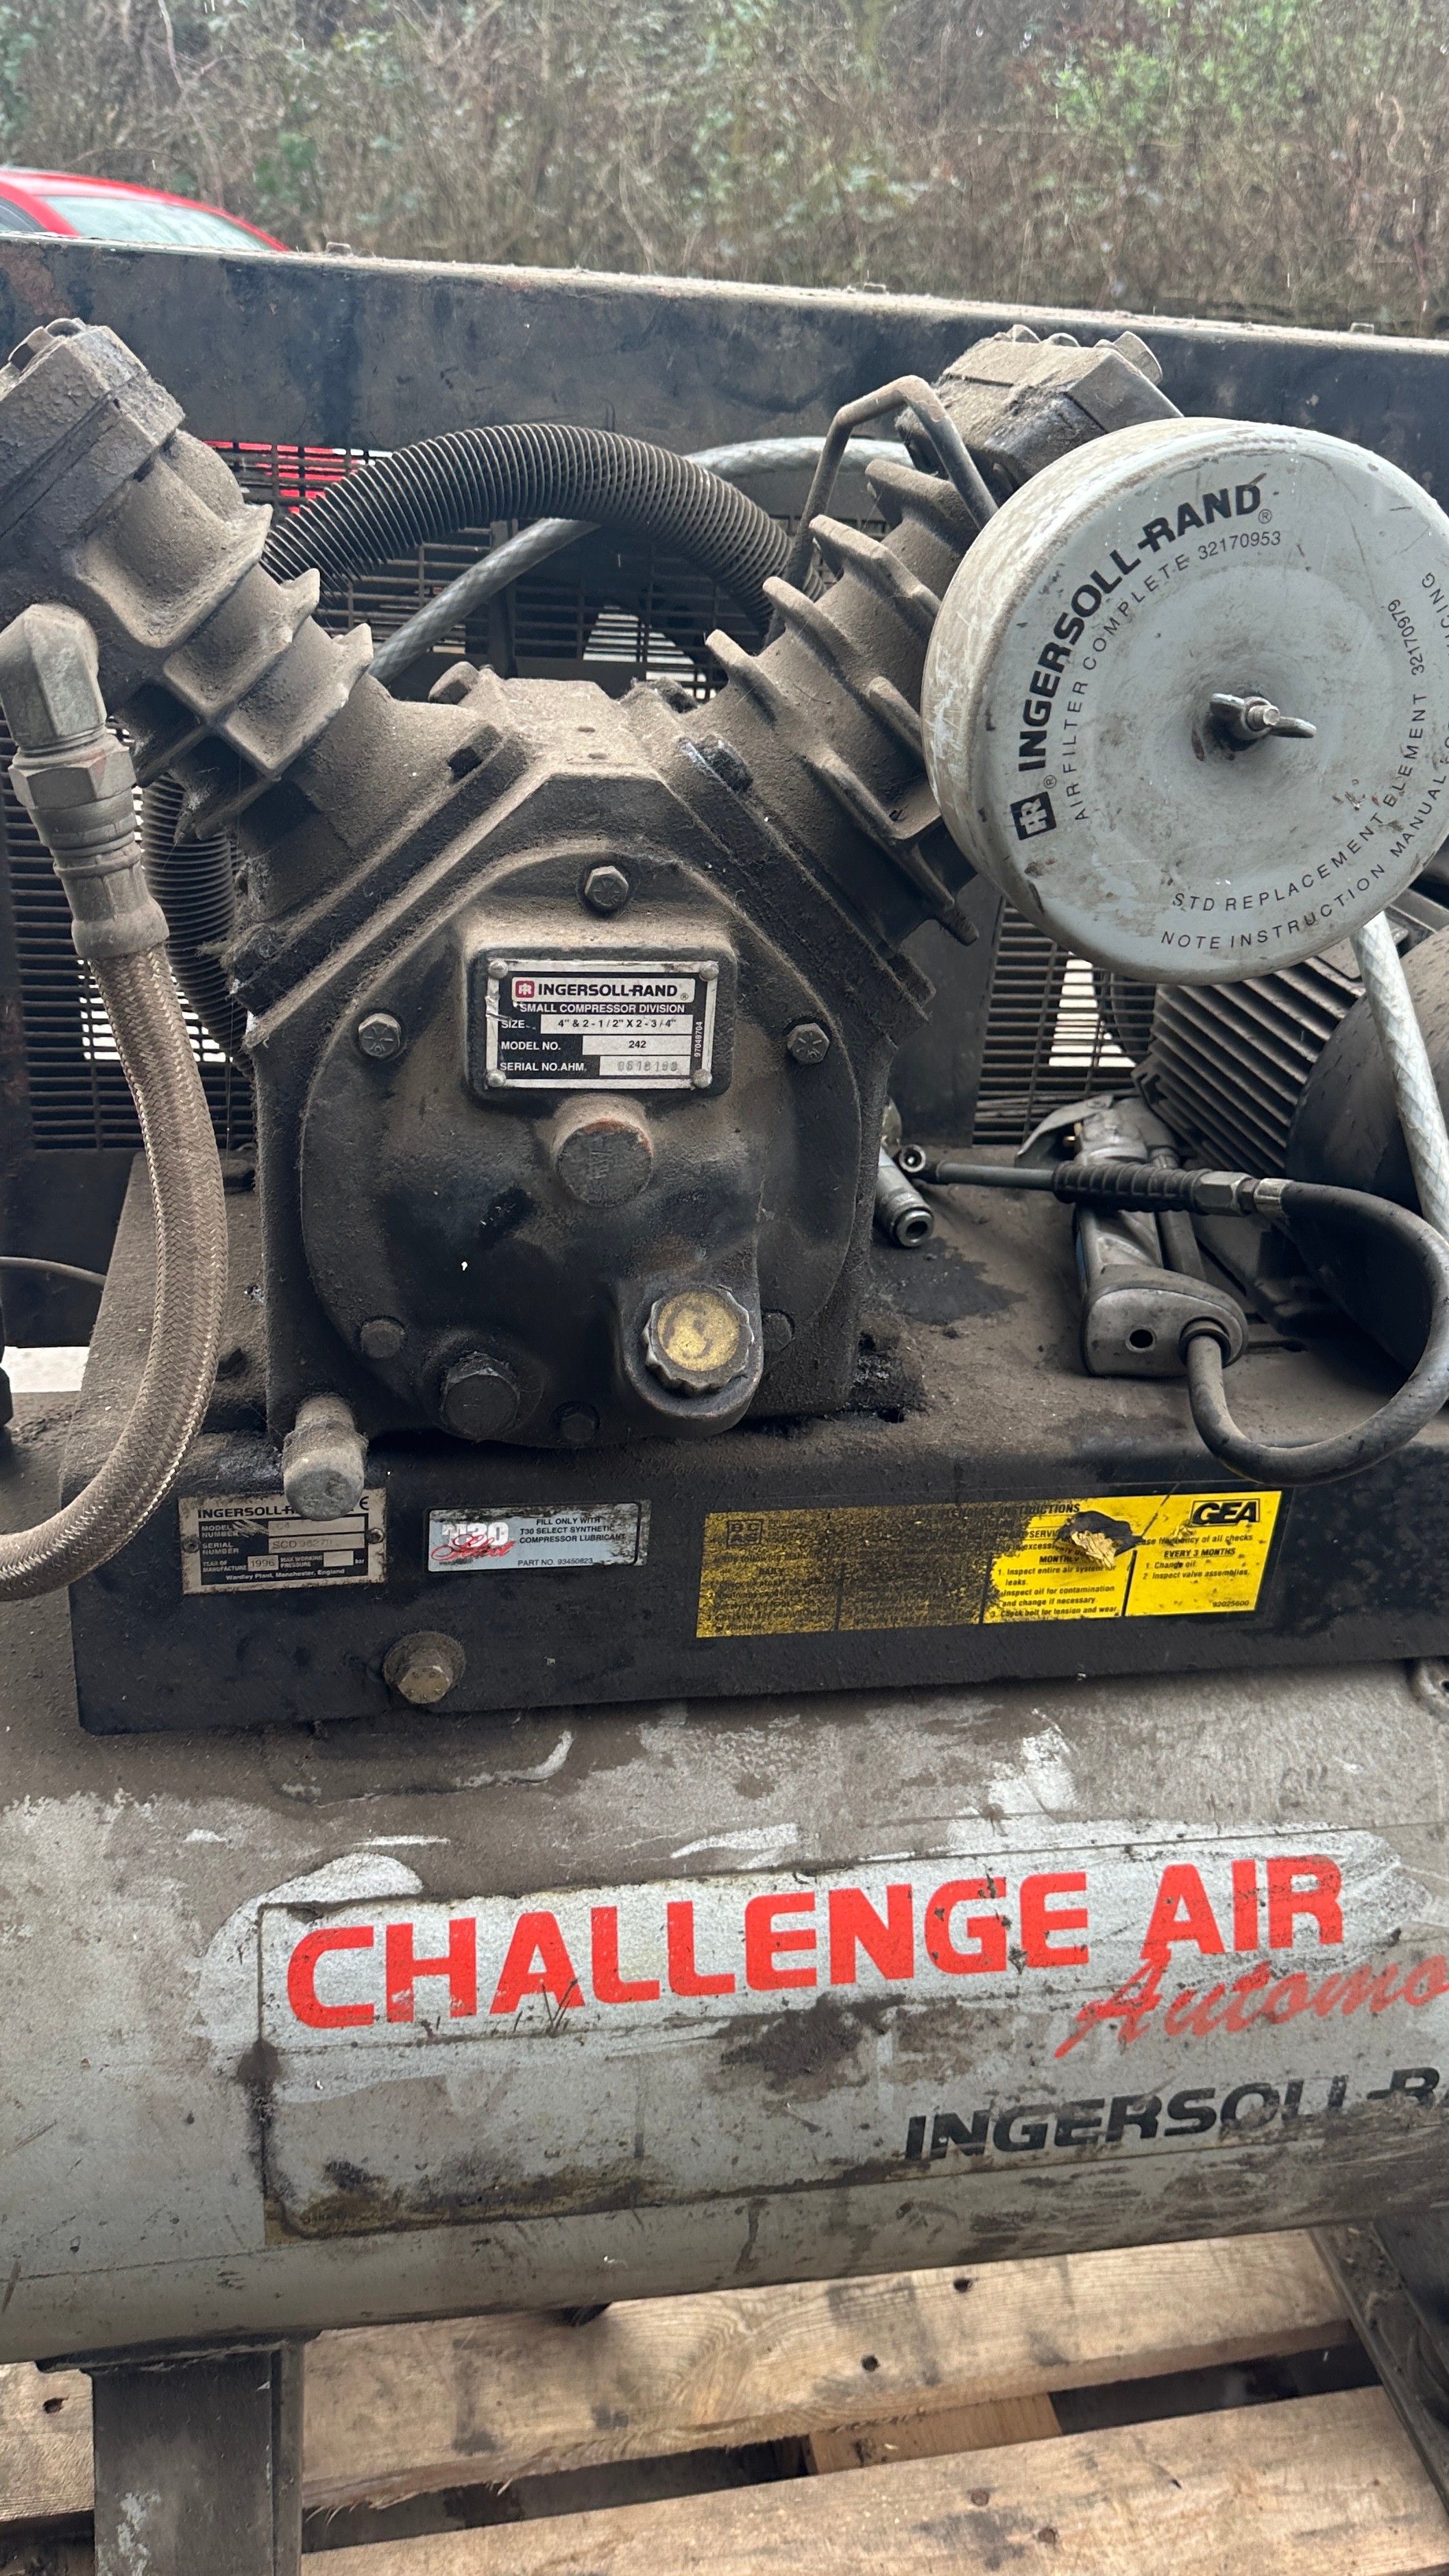 Challenege air compresssor -Welded pressure vessel EN286 - Ingasol brand - Image 3 of 5